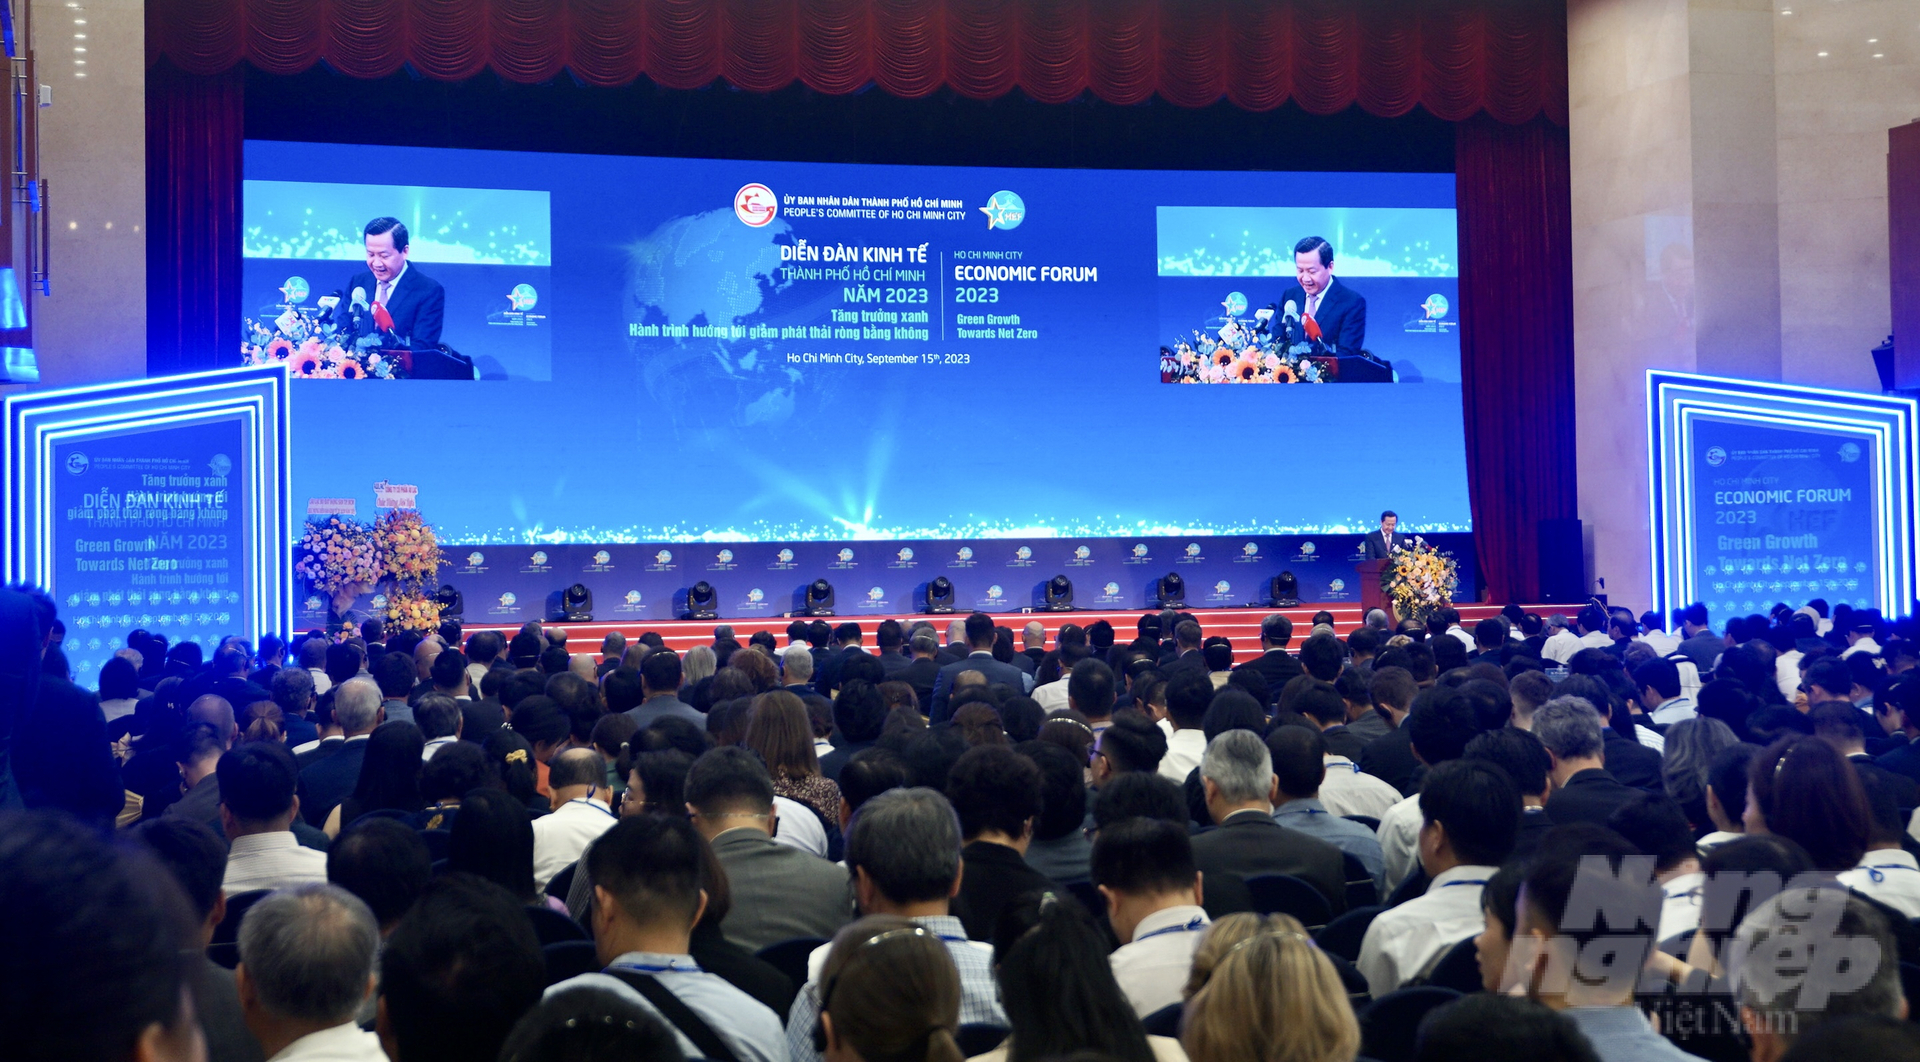 Ho Chi Minh City Economy Forum 2023 opened on the morning of September 15. Photo: Nguyen Thuy.